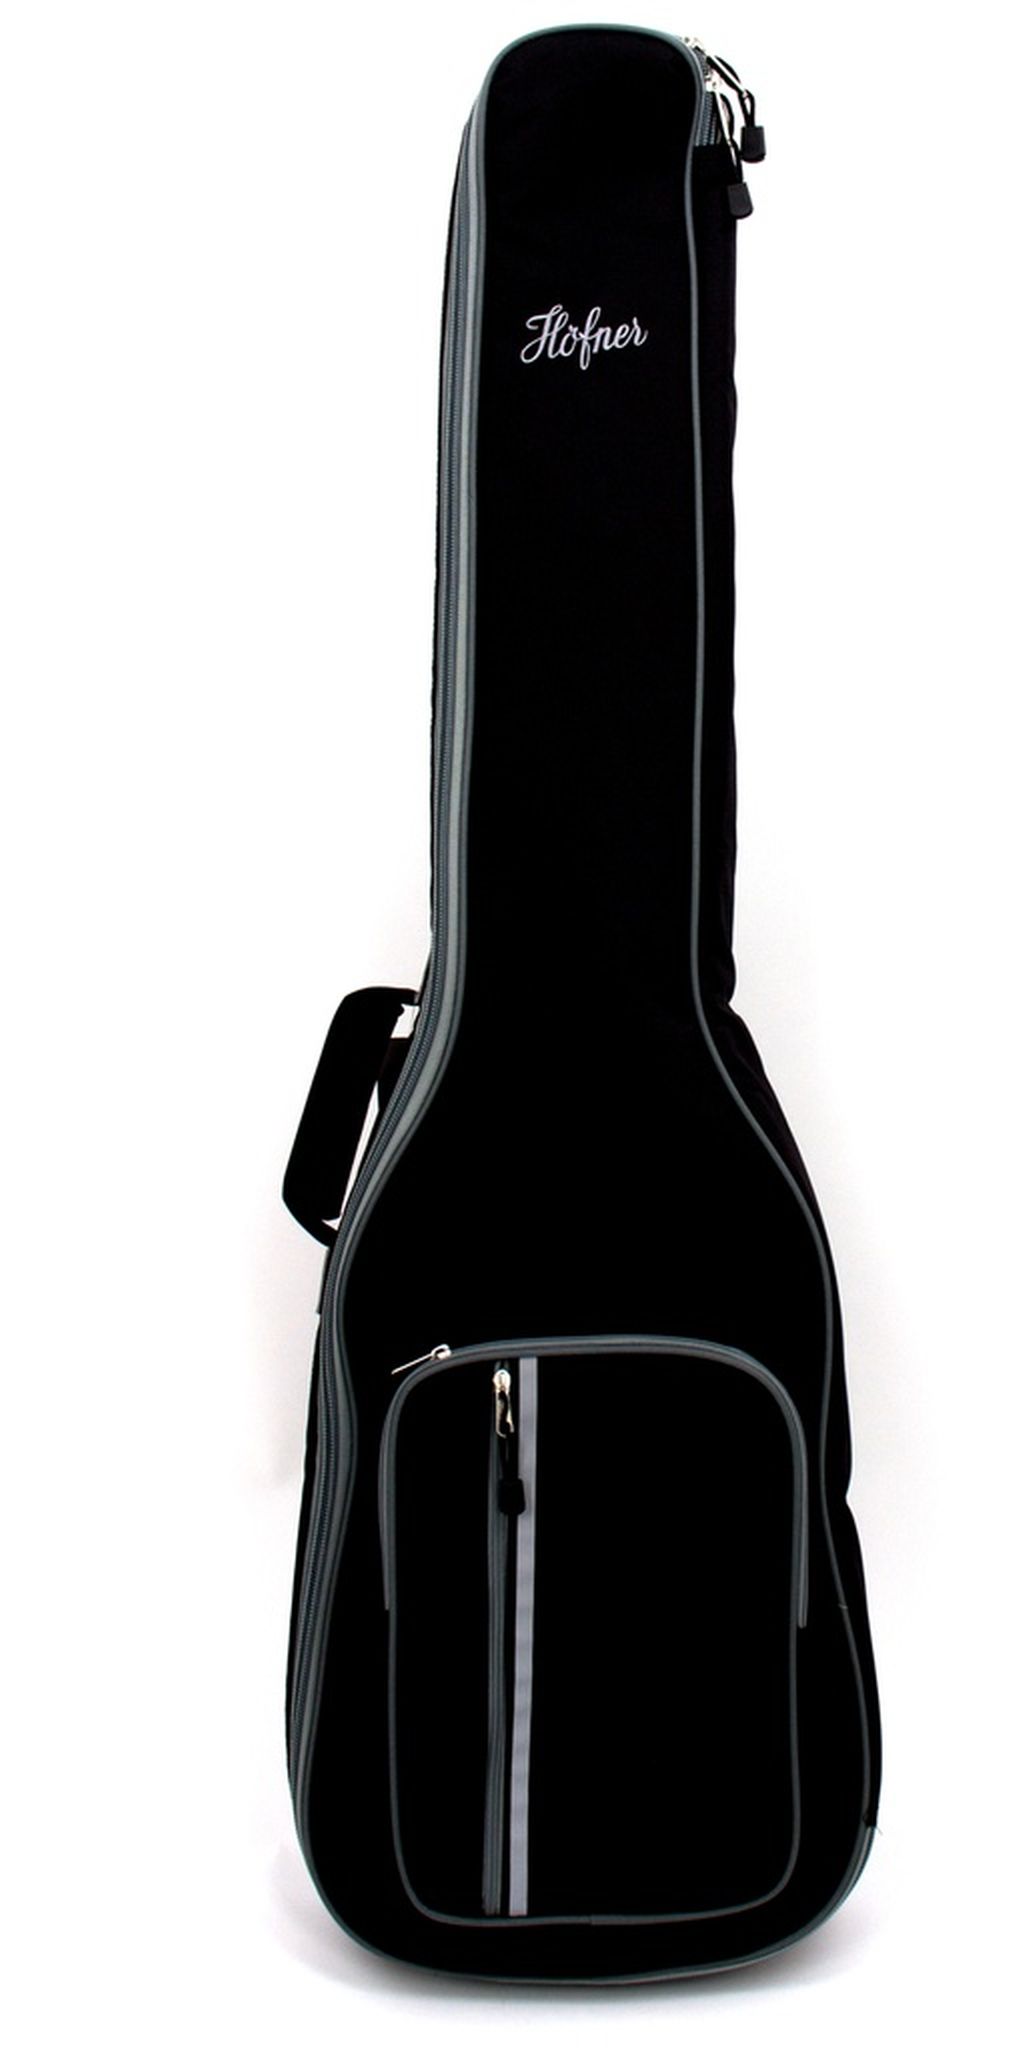 Höfner Artist Line Tasche Violin Bass / Club Bass